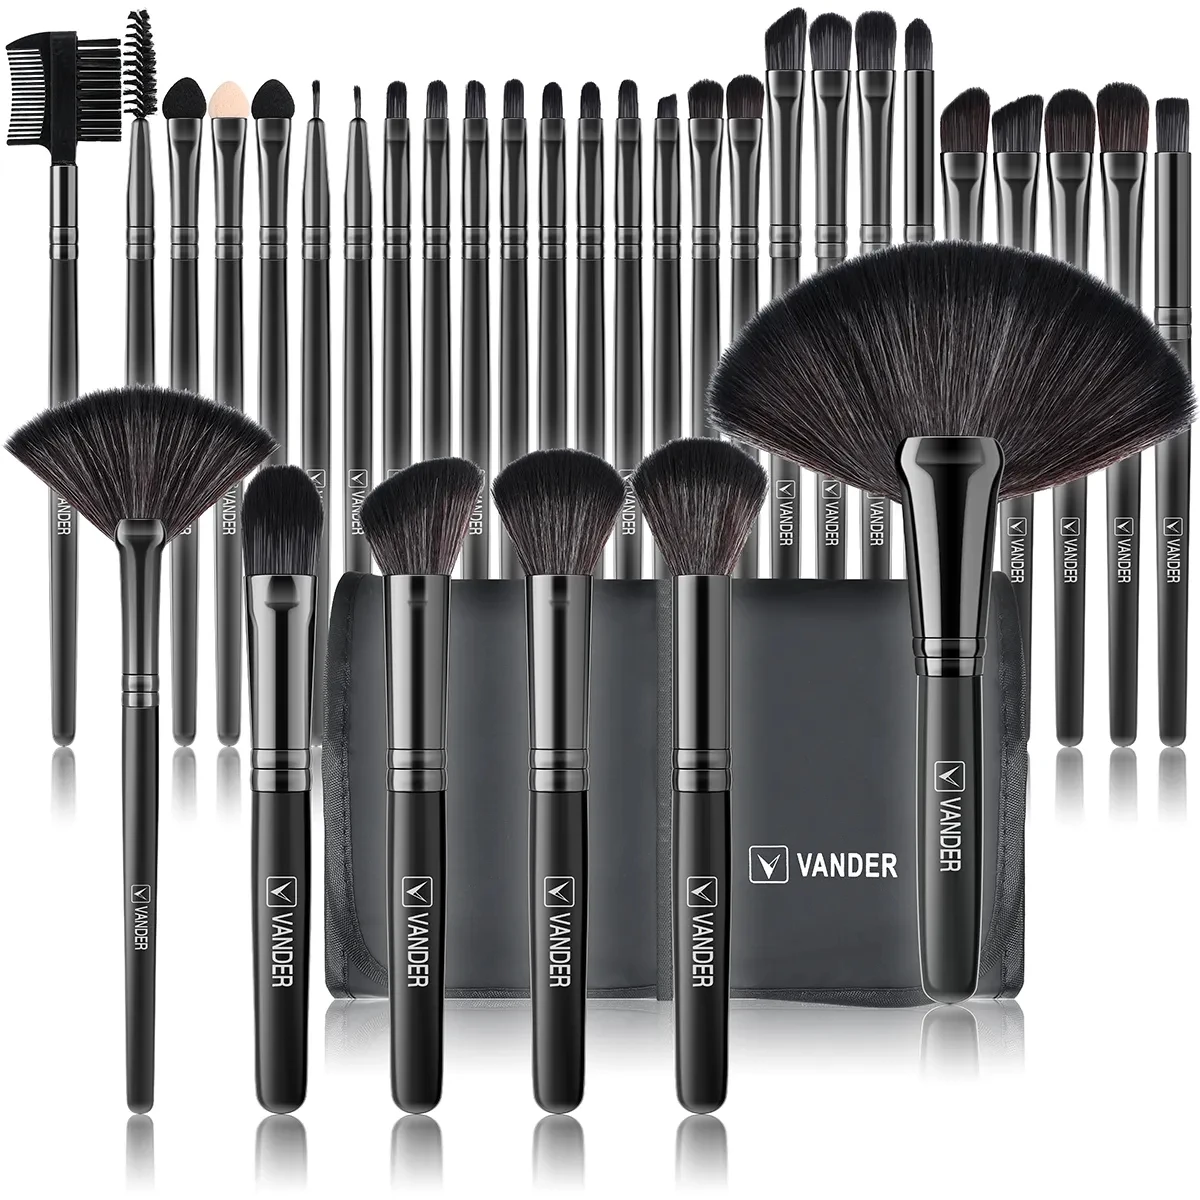 New Makeup Brushes Set Foundation Powder Contour Blush Concealer Eyeshadow Blending Highlight Eyeliner Brushes Fast Shipping